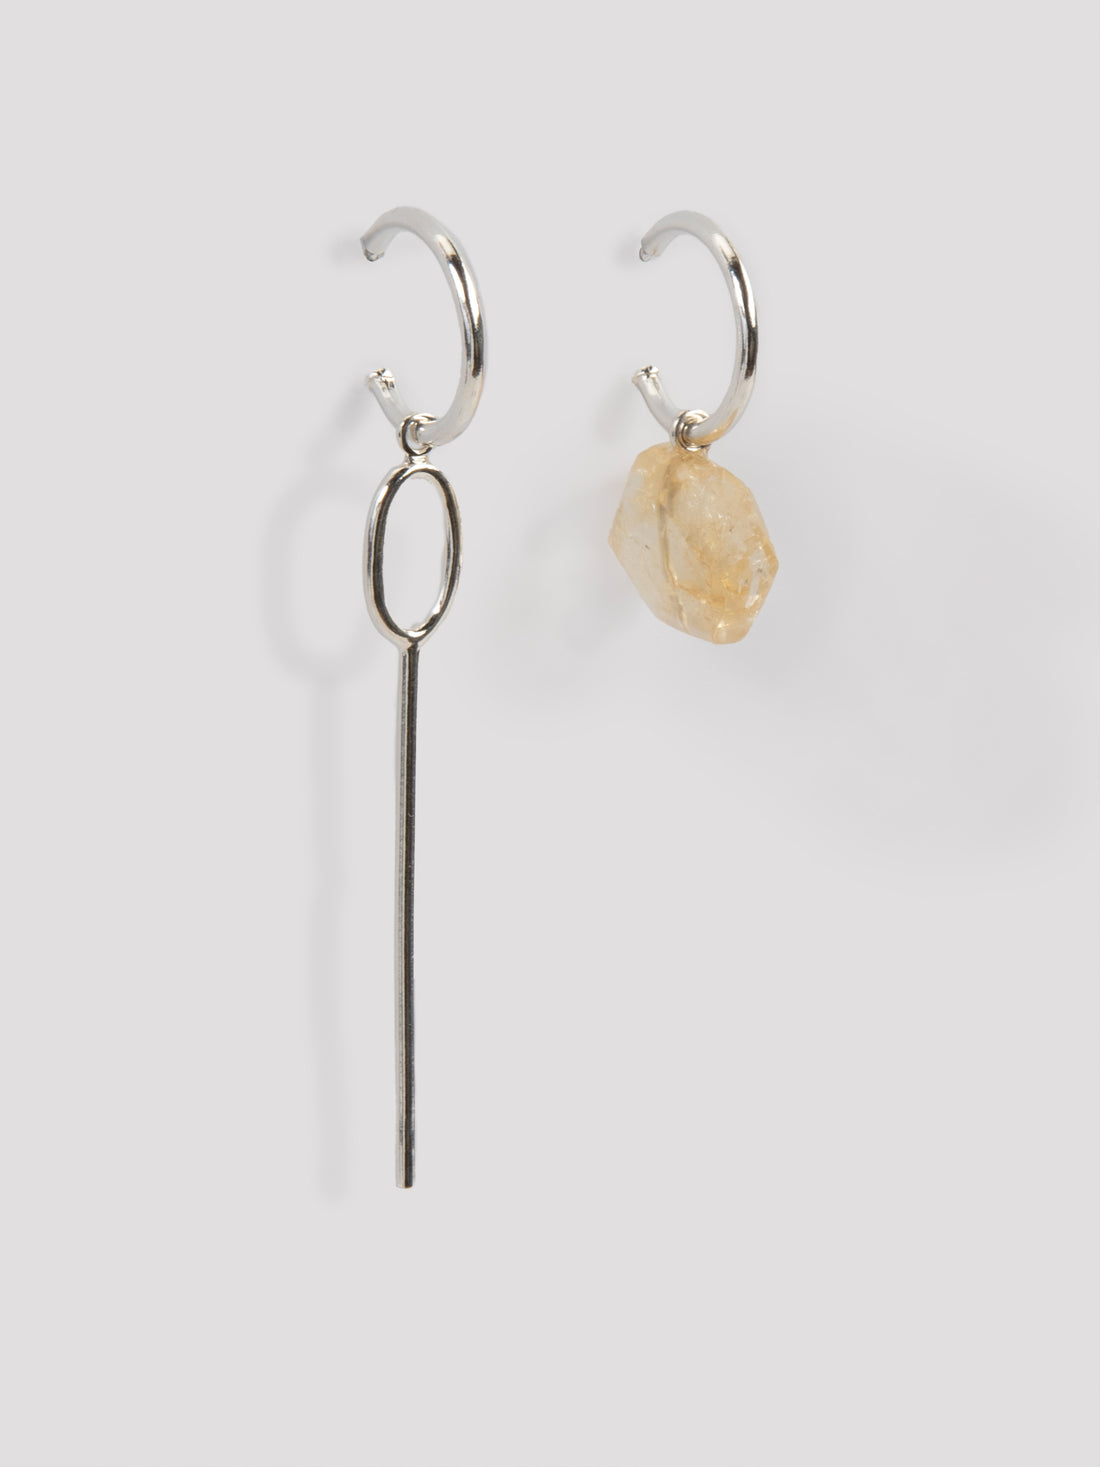 Bauspiel citrine earrings - Studio Collect